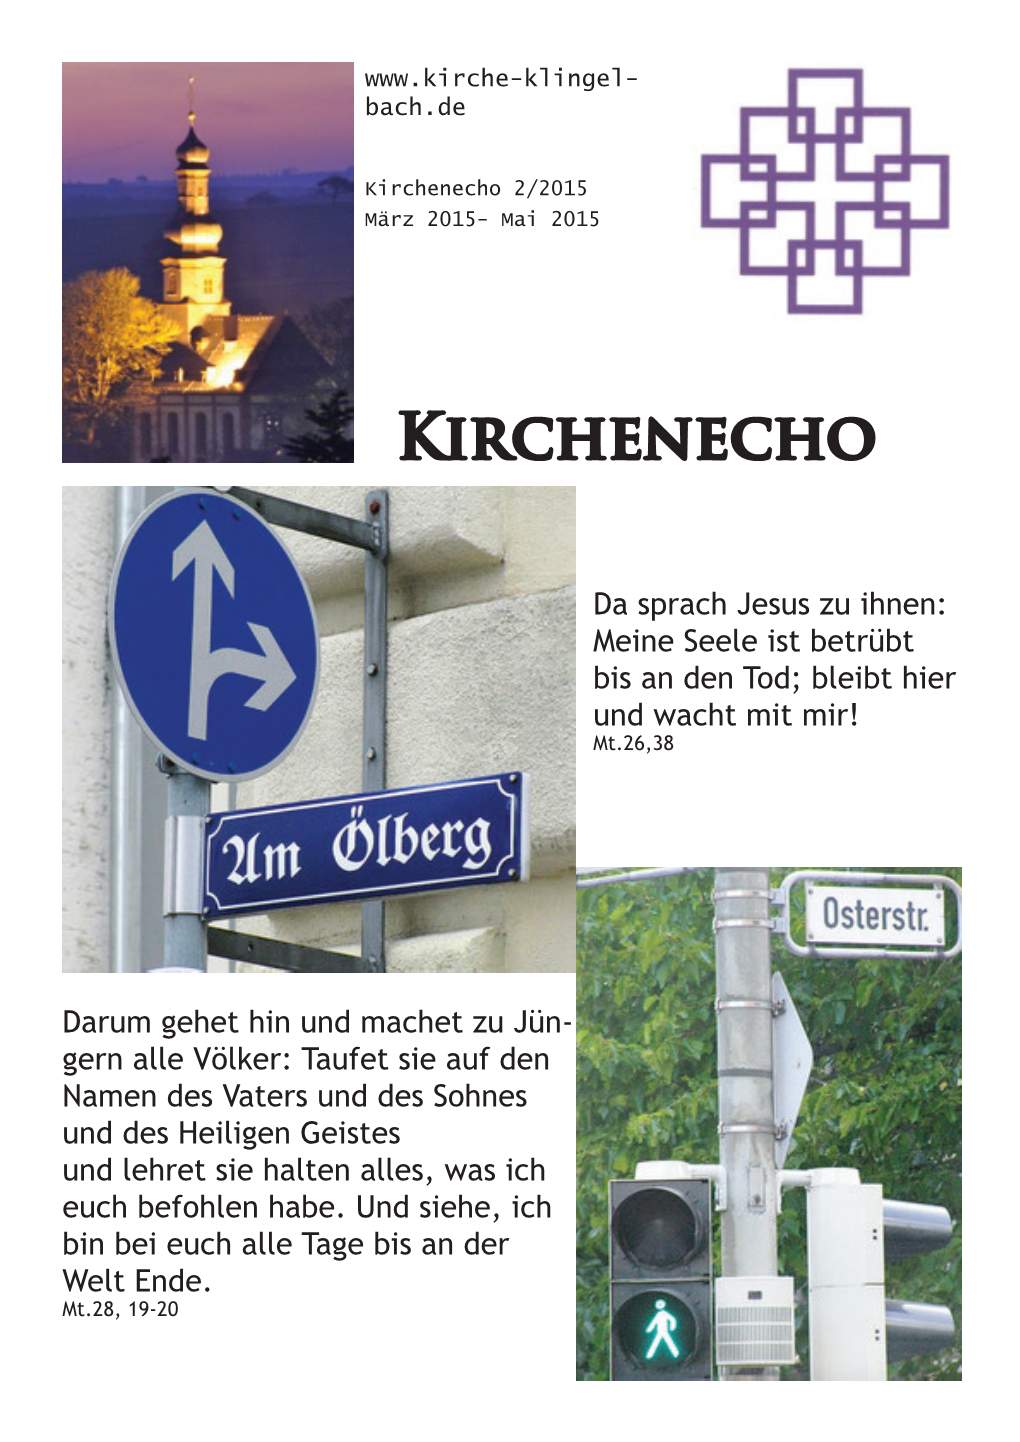 Kirchenecho 2/2015 März 2015- Mai 2015